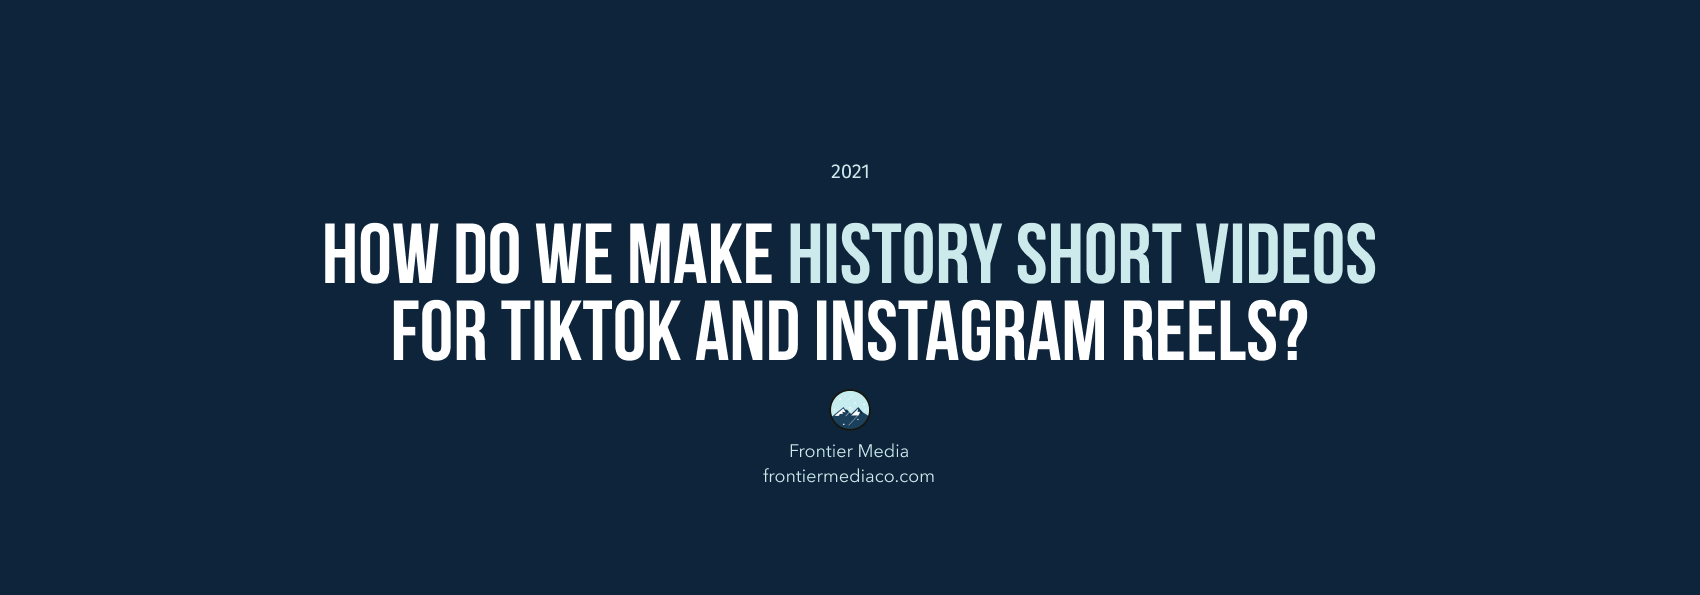 How Do We Make History Short Videos for Tiktok and Instagram Reels?